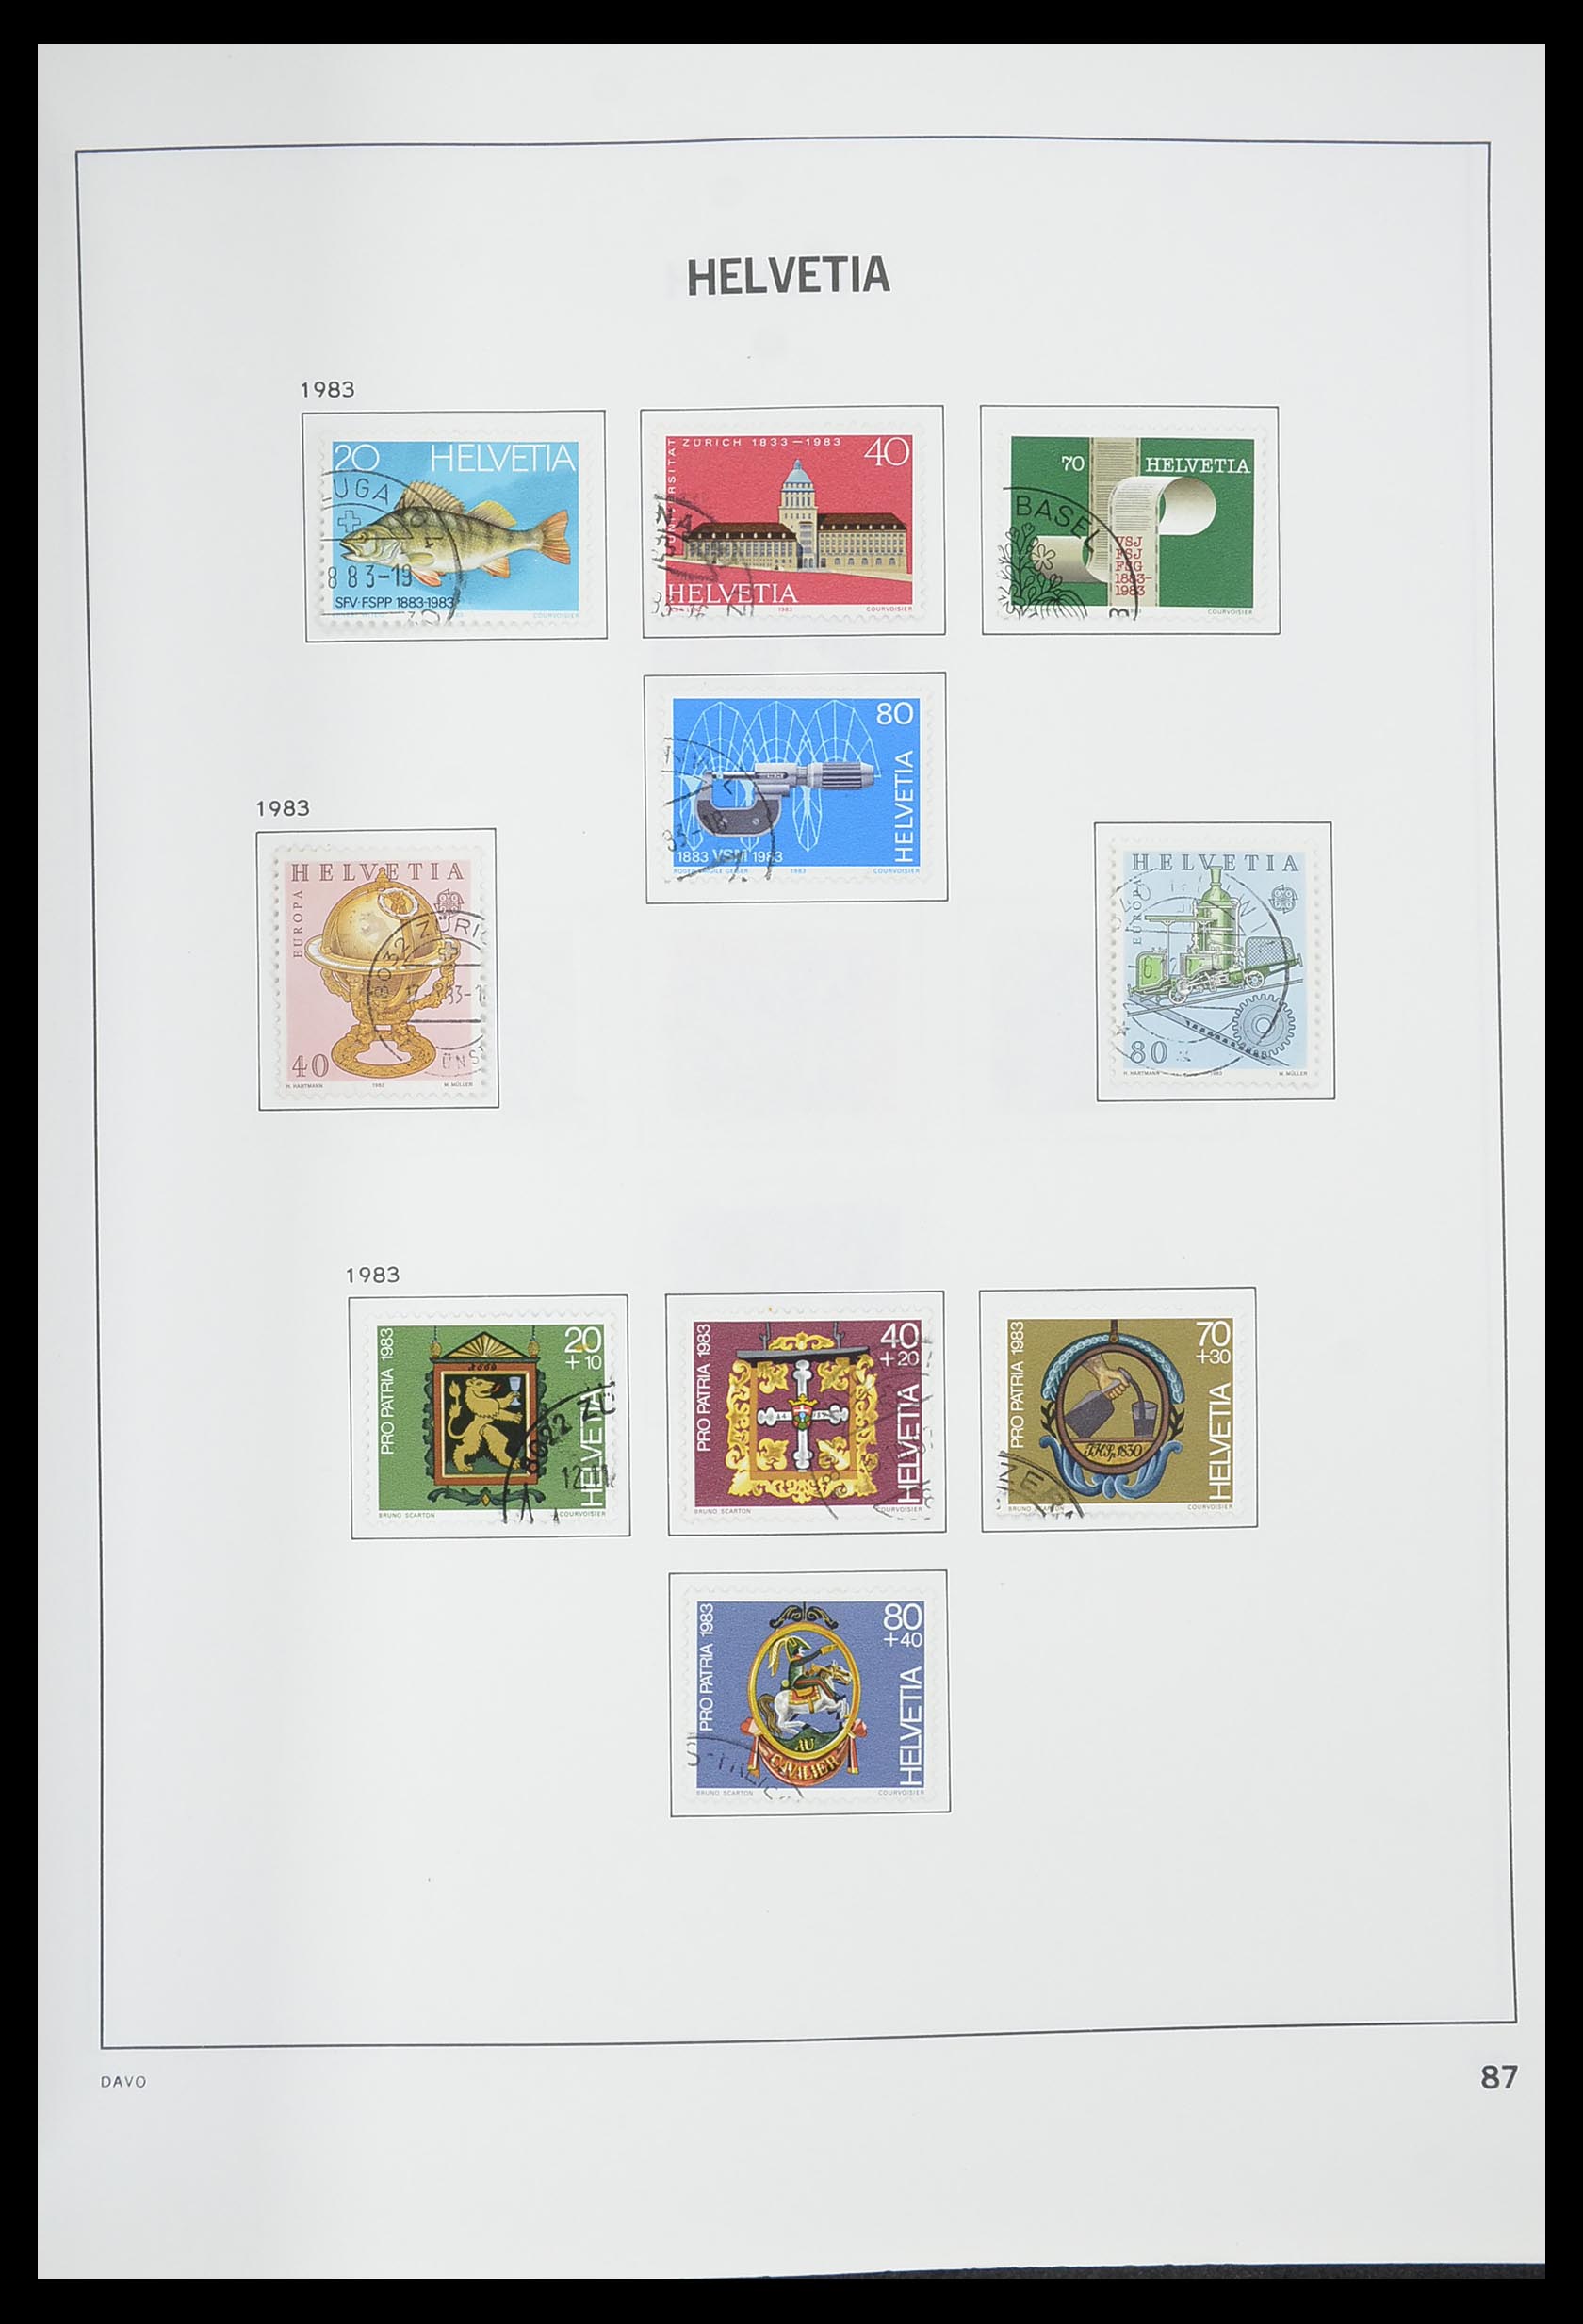 33559 088 - Stamp collection 33559 Switzerland 1850-2000.